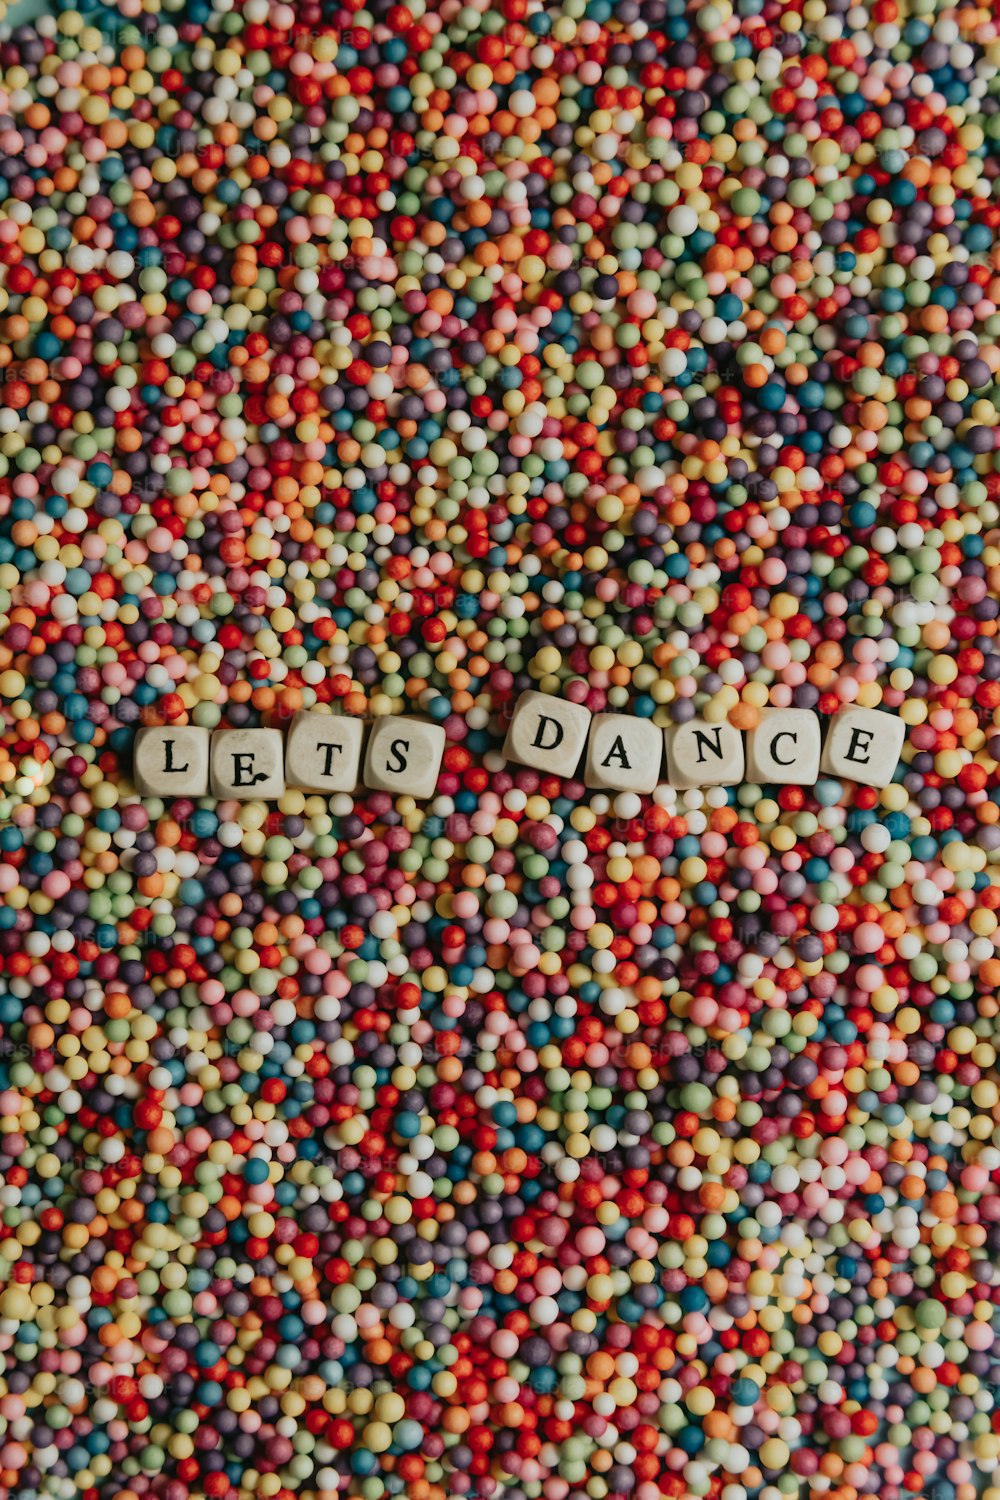 Una pila di caramelle colorate con la parola Class Dance scritta su di esse